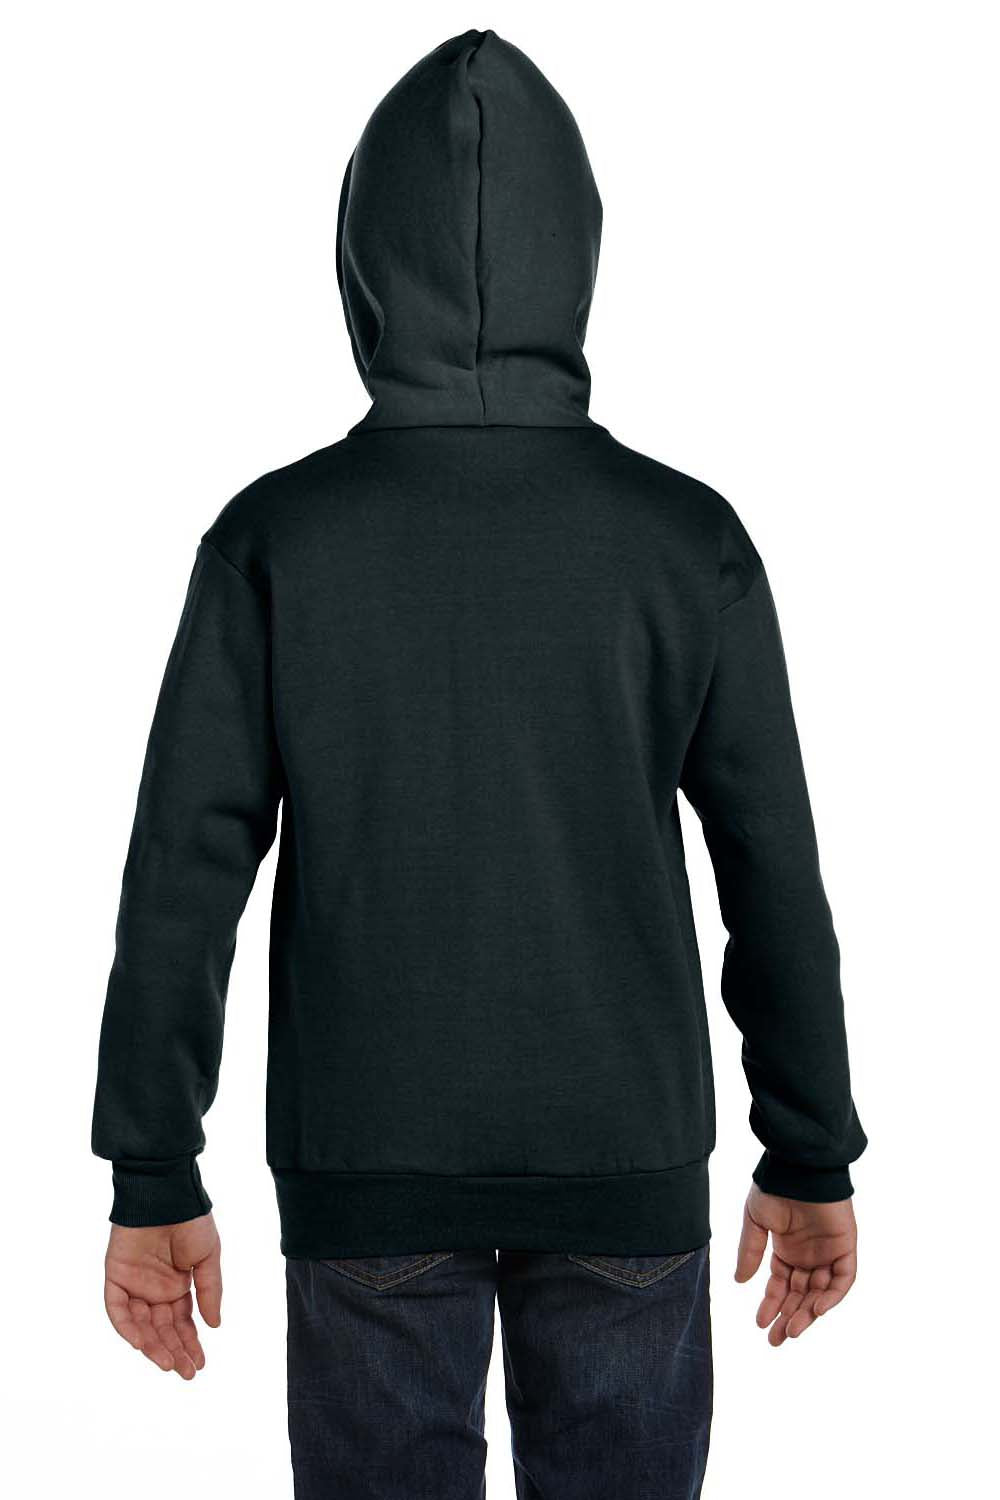 Hanes P480 Youth EcoSmart Print Pro XP Full Zip Hooded Sweatshirt Hoodie Black Back